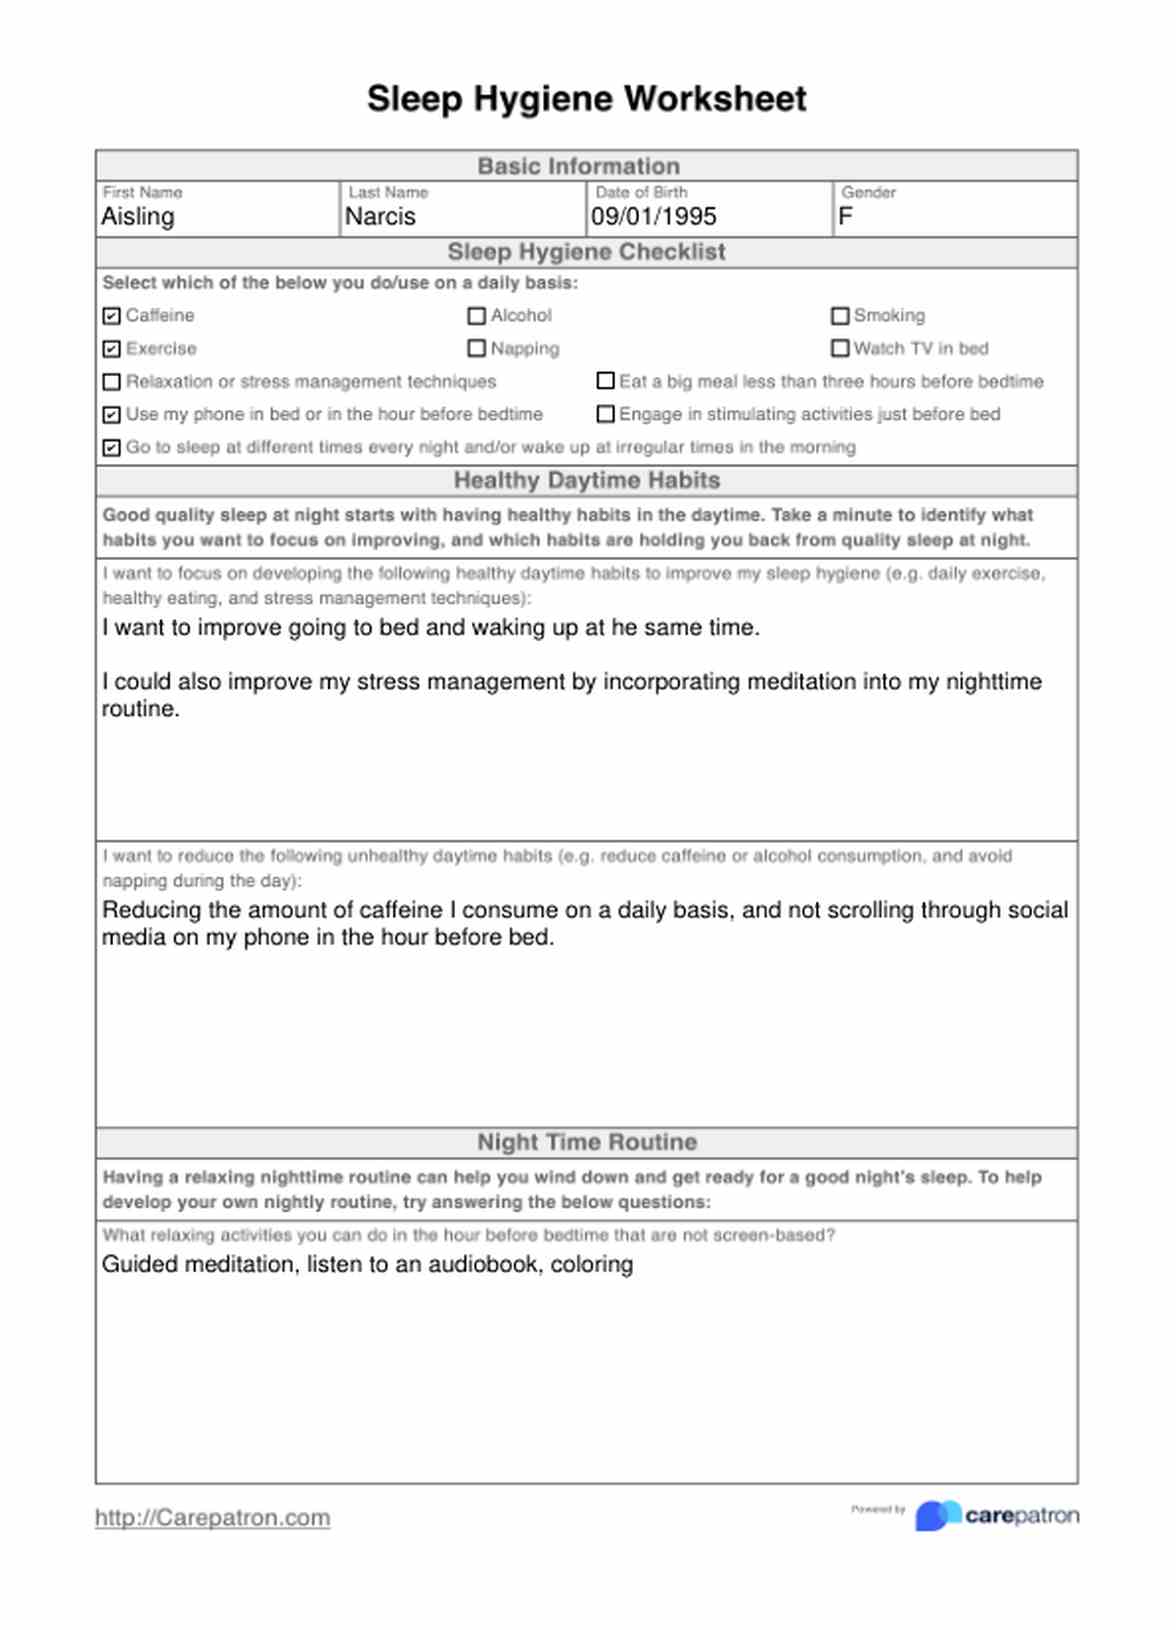 Sleep Hygiene Worksheets PDF Example